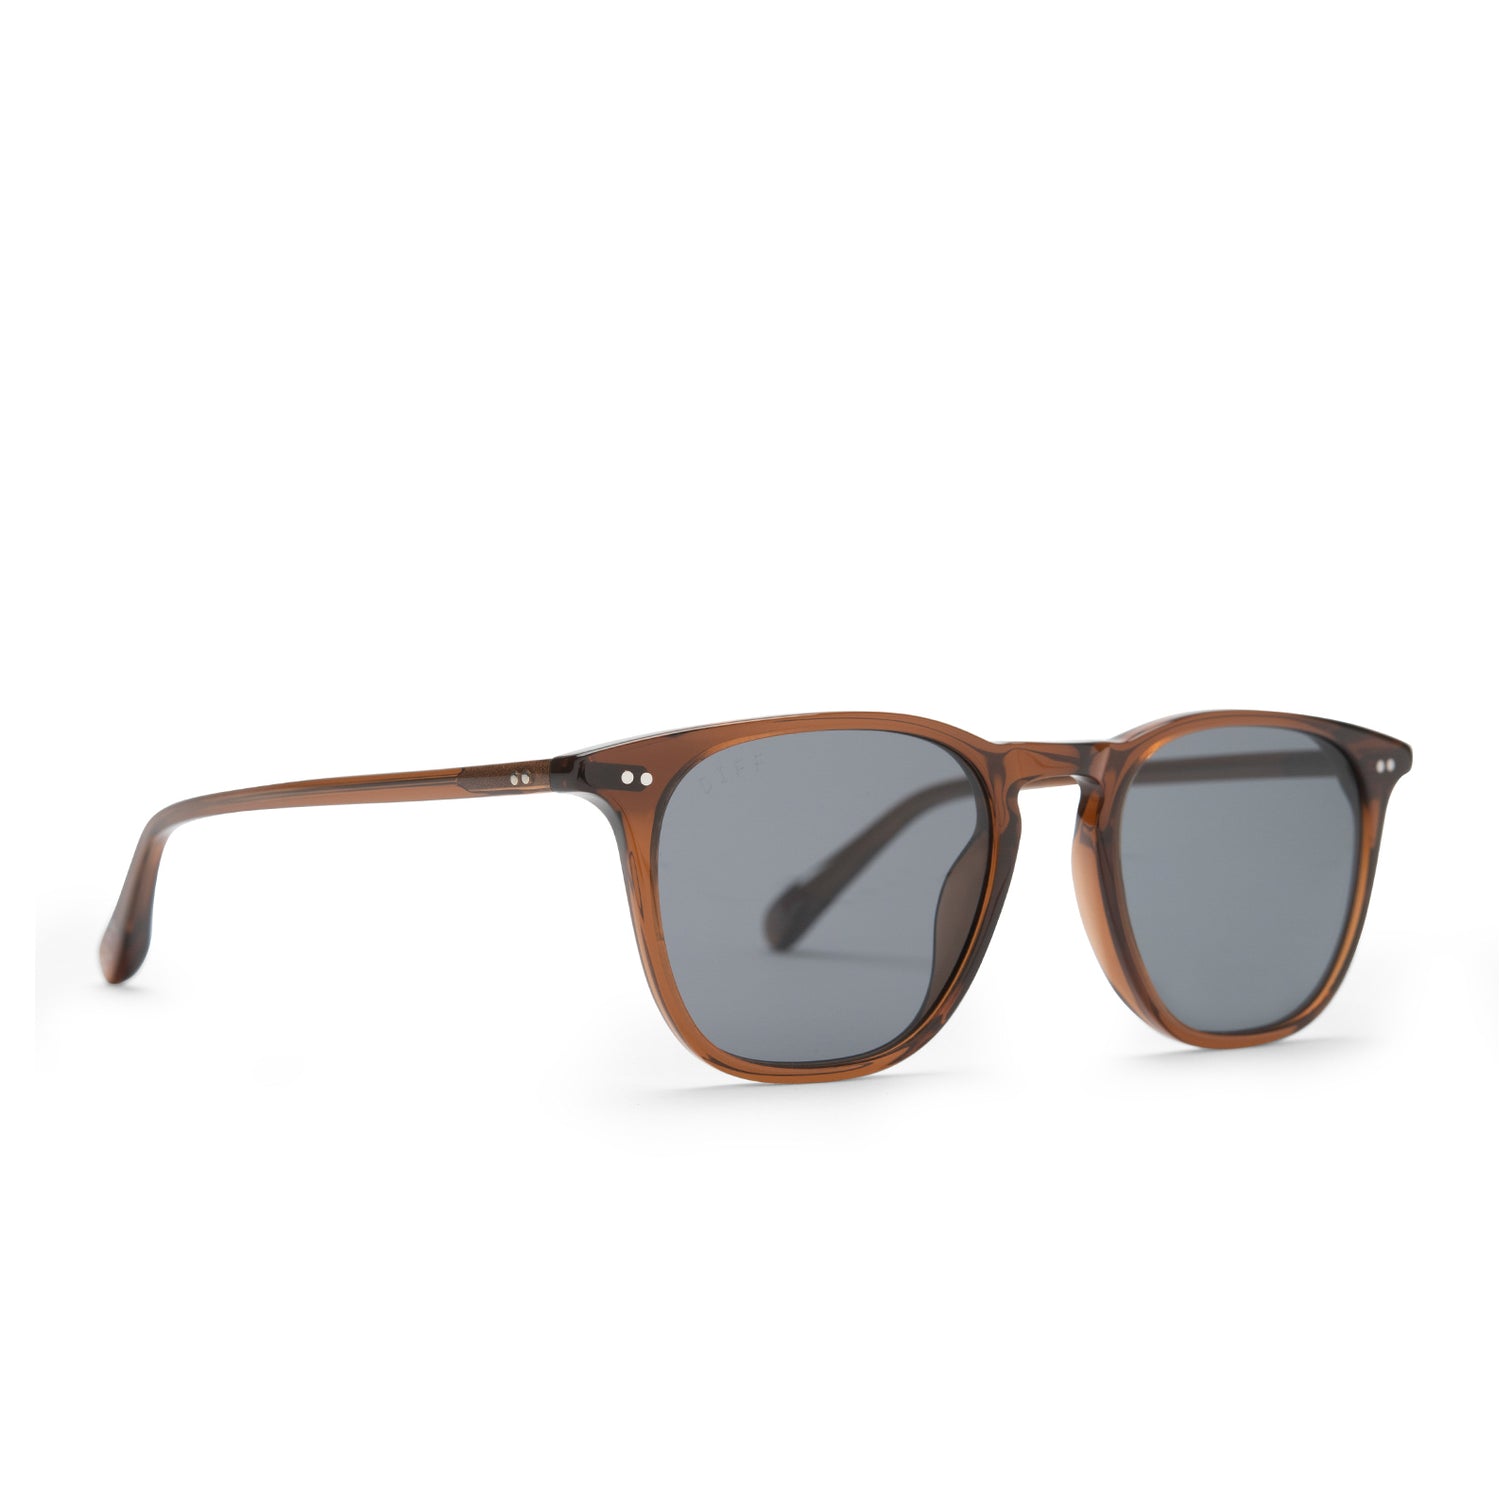 Maxwell Square Sunglasses | Whiskey & Grey Polarized Lenses | DIFF Eyewear